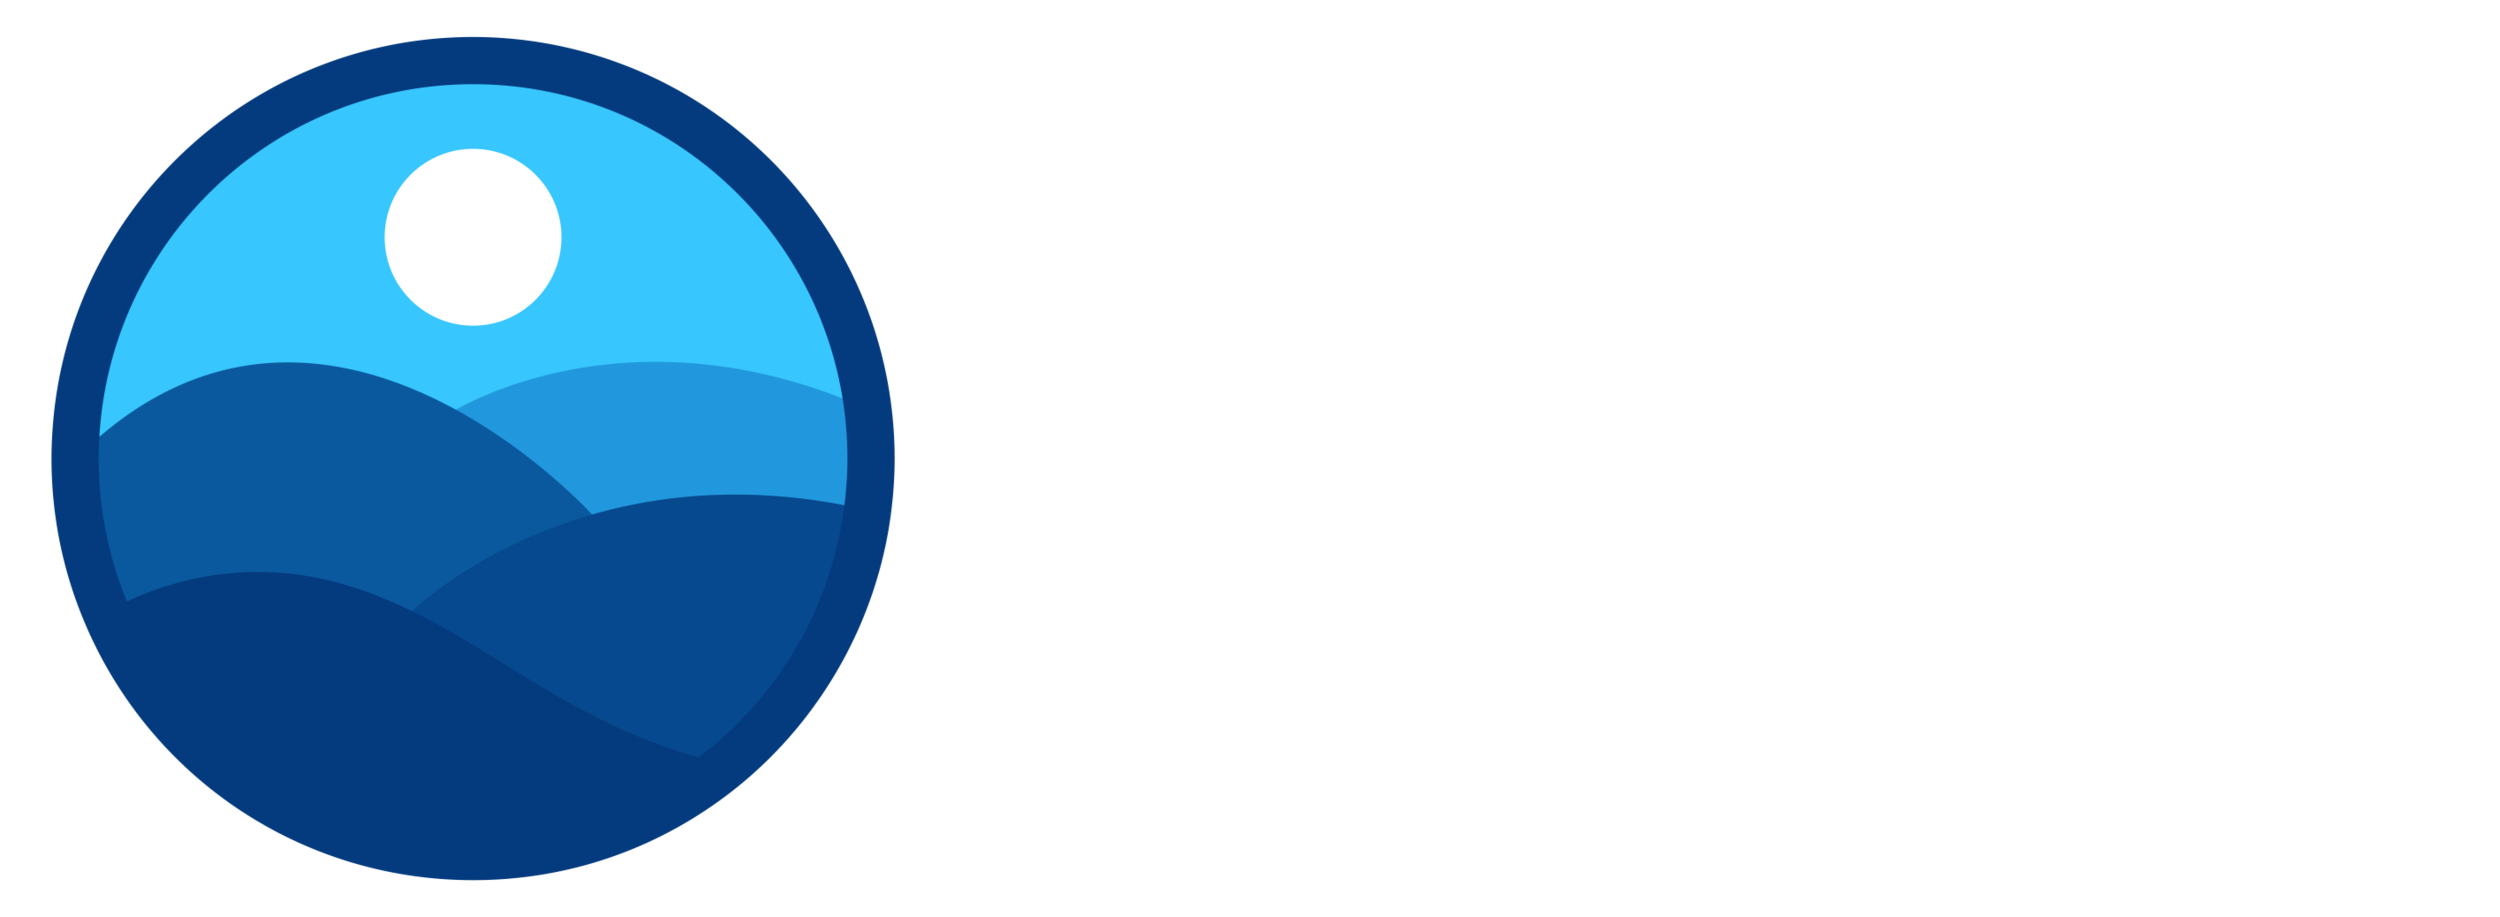 Bluemont Church